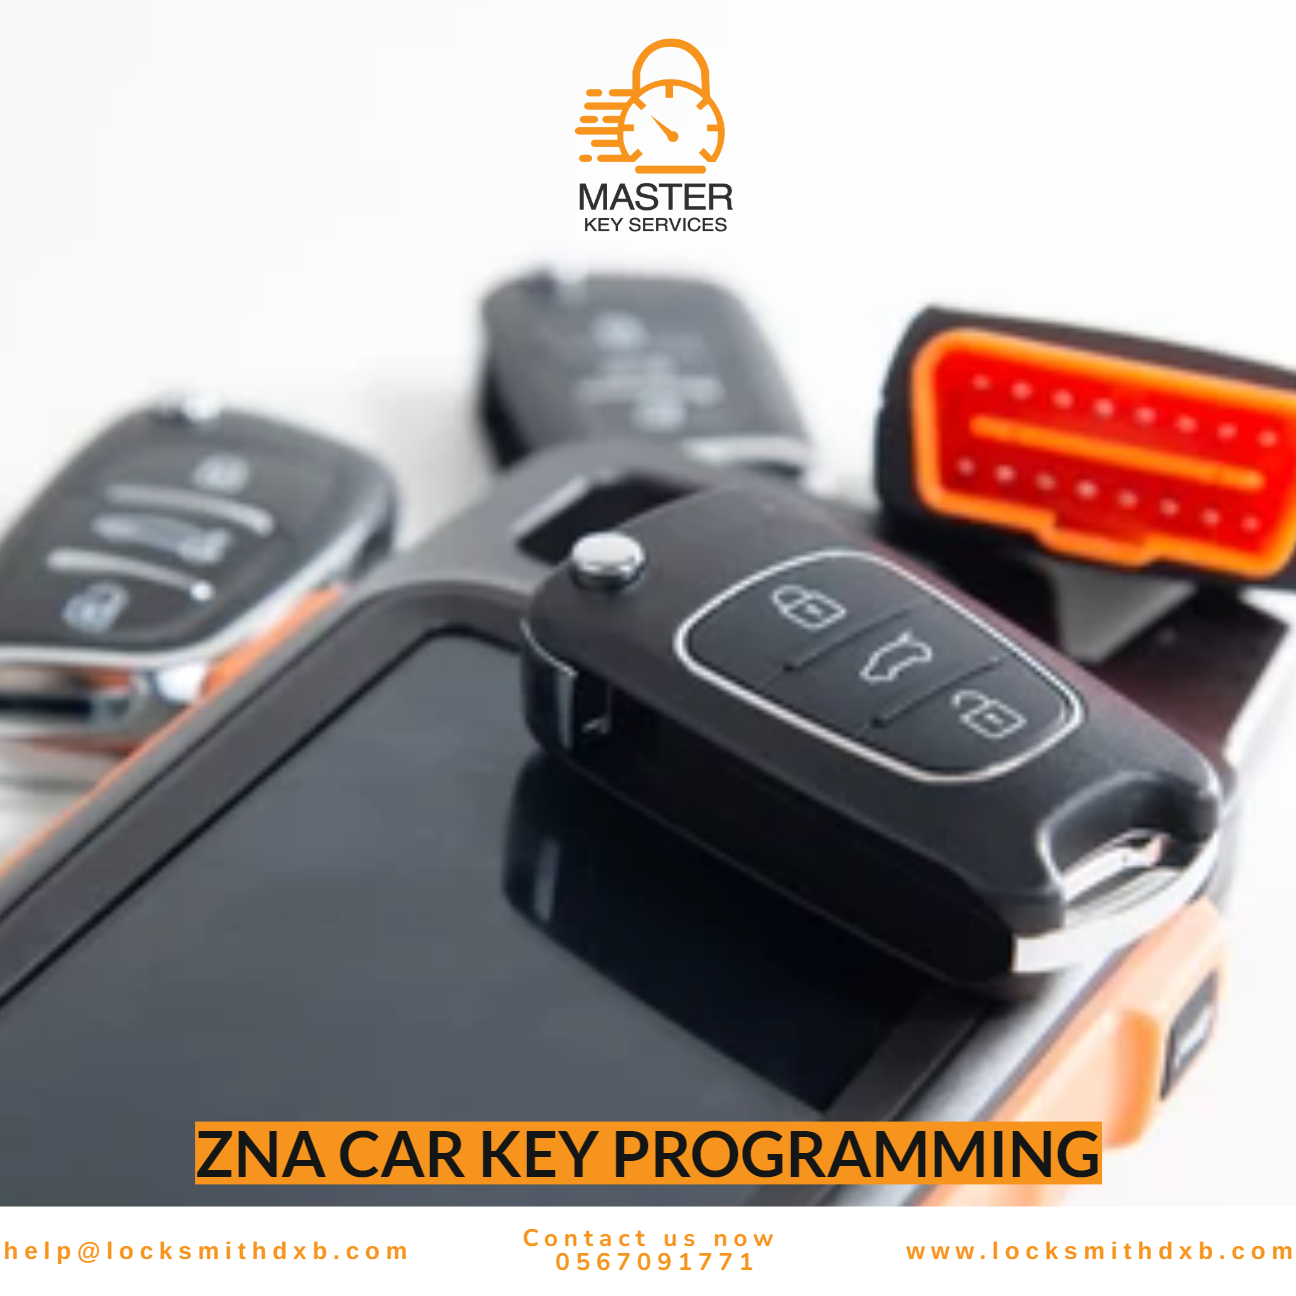 ZNA car key programming